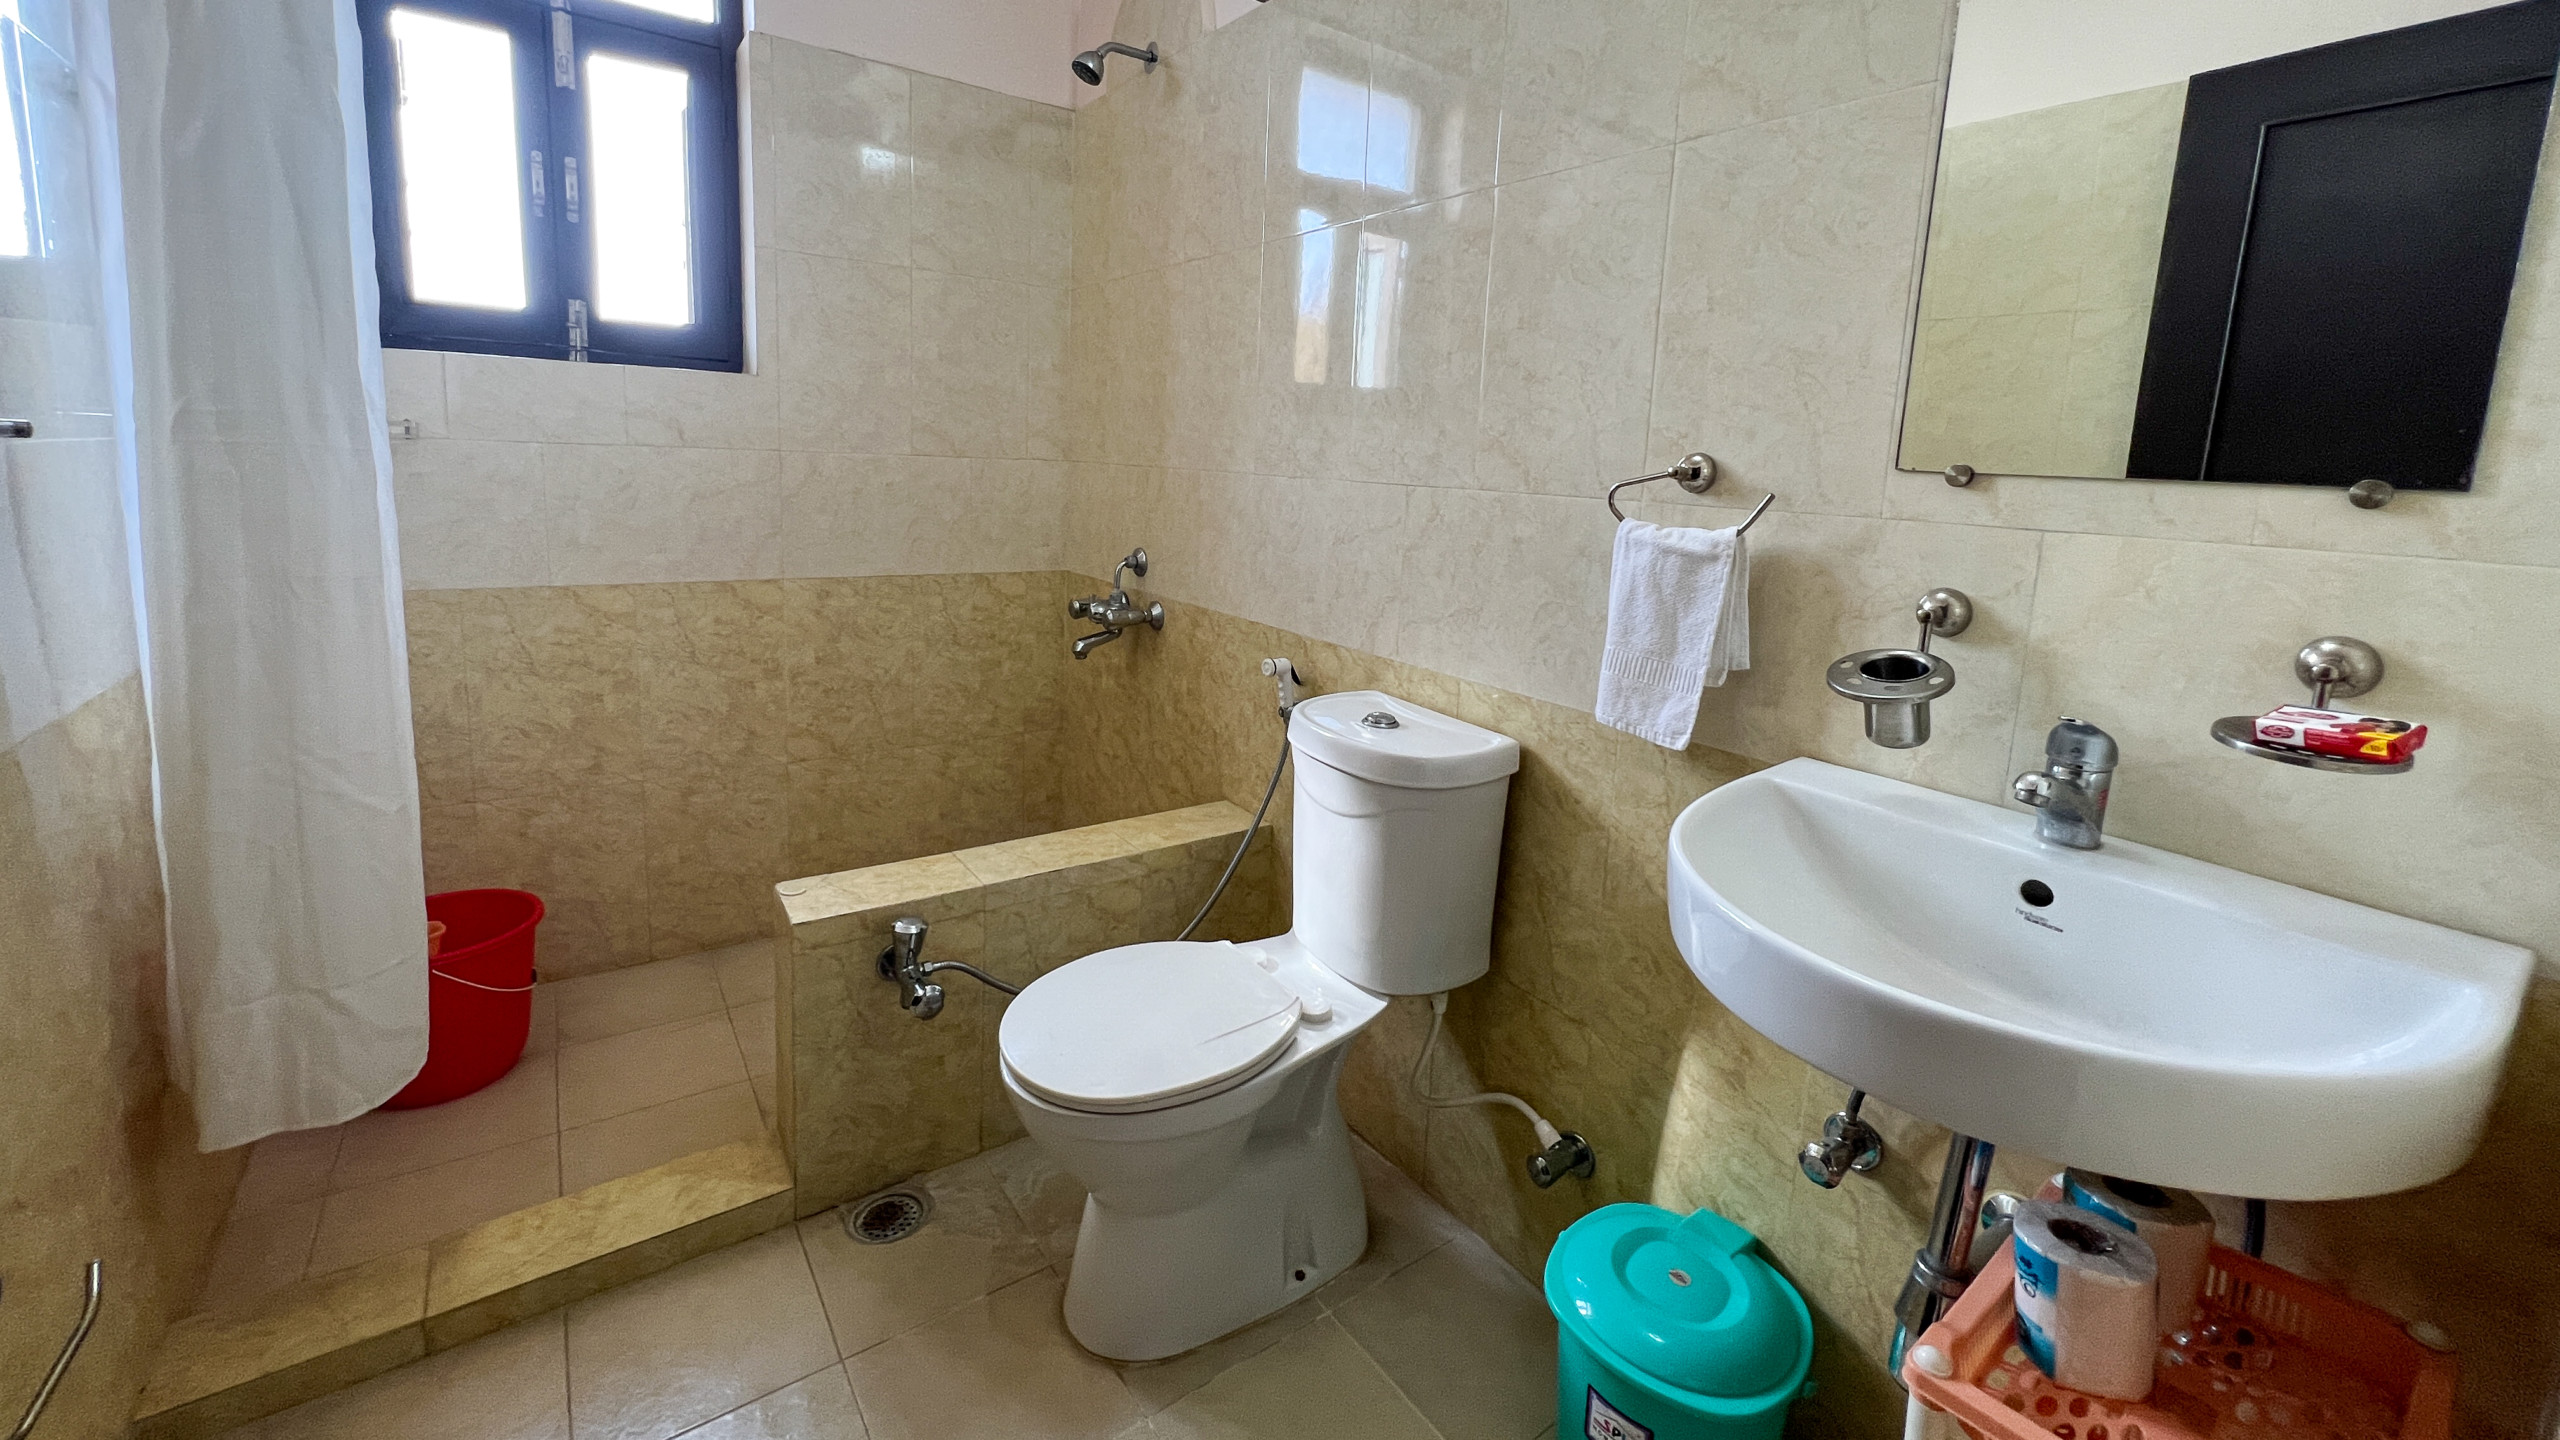 KSI 2023 bathrooms scaled - Himalayan Institute